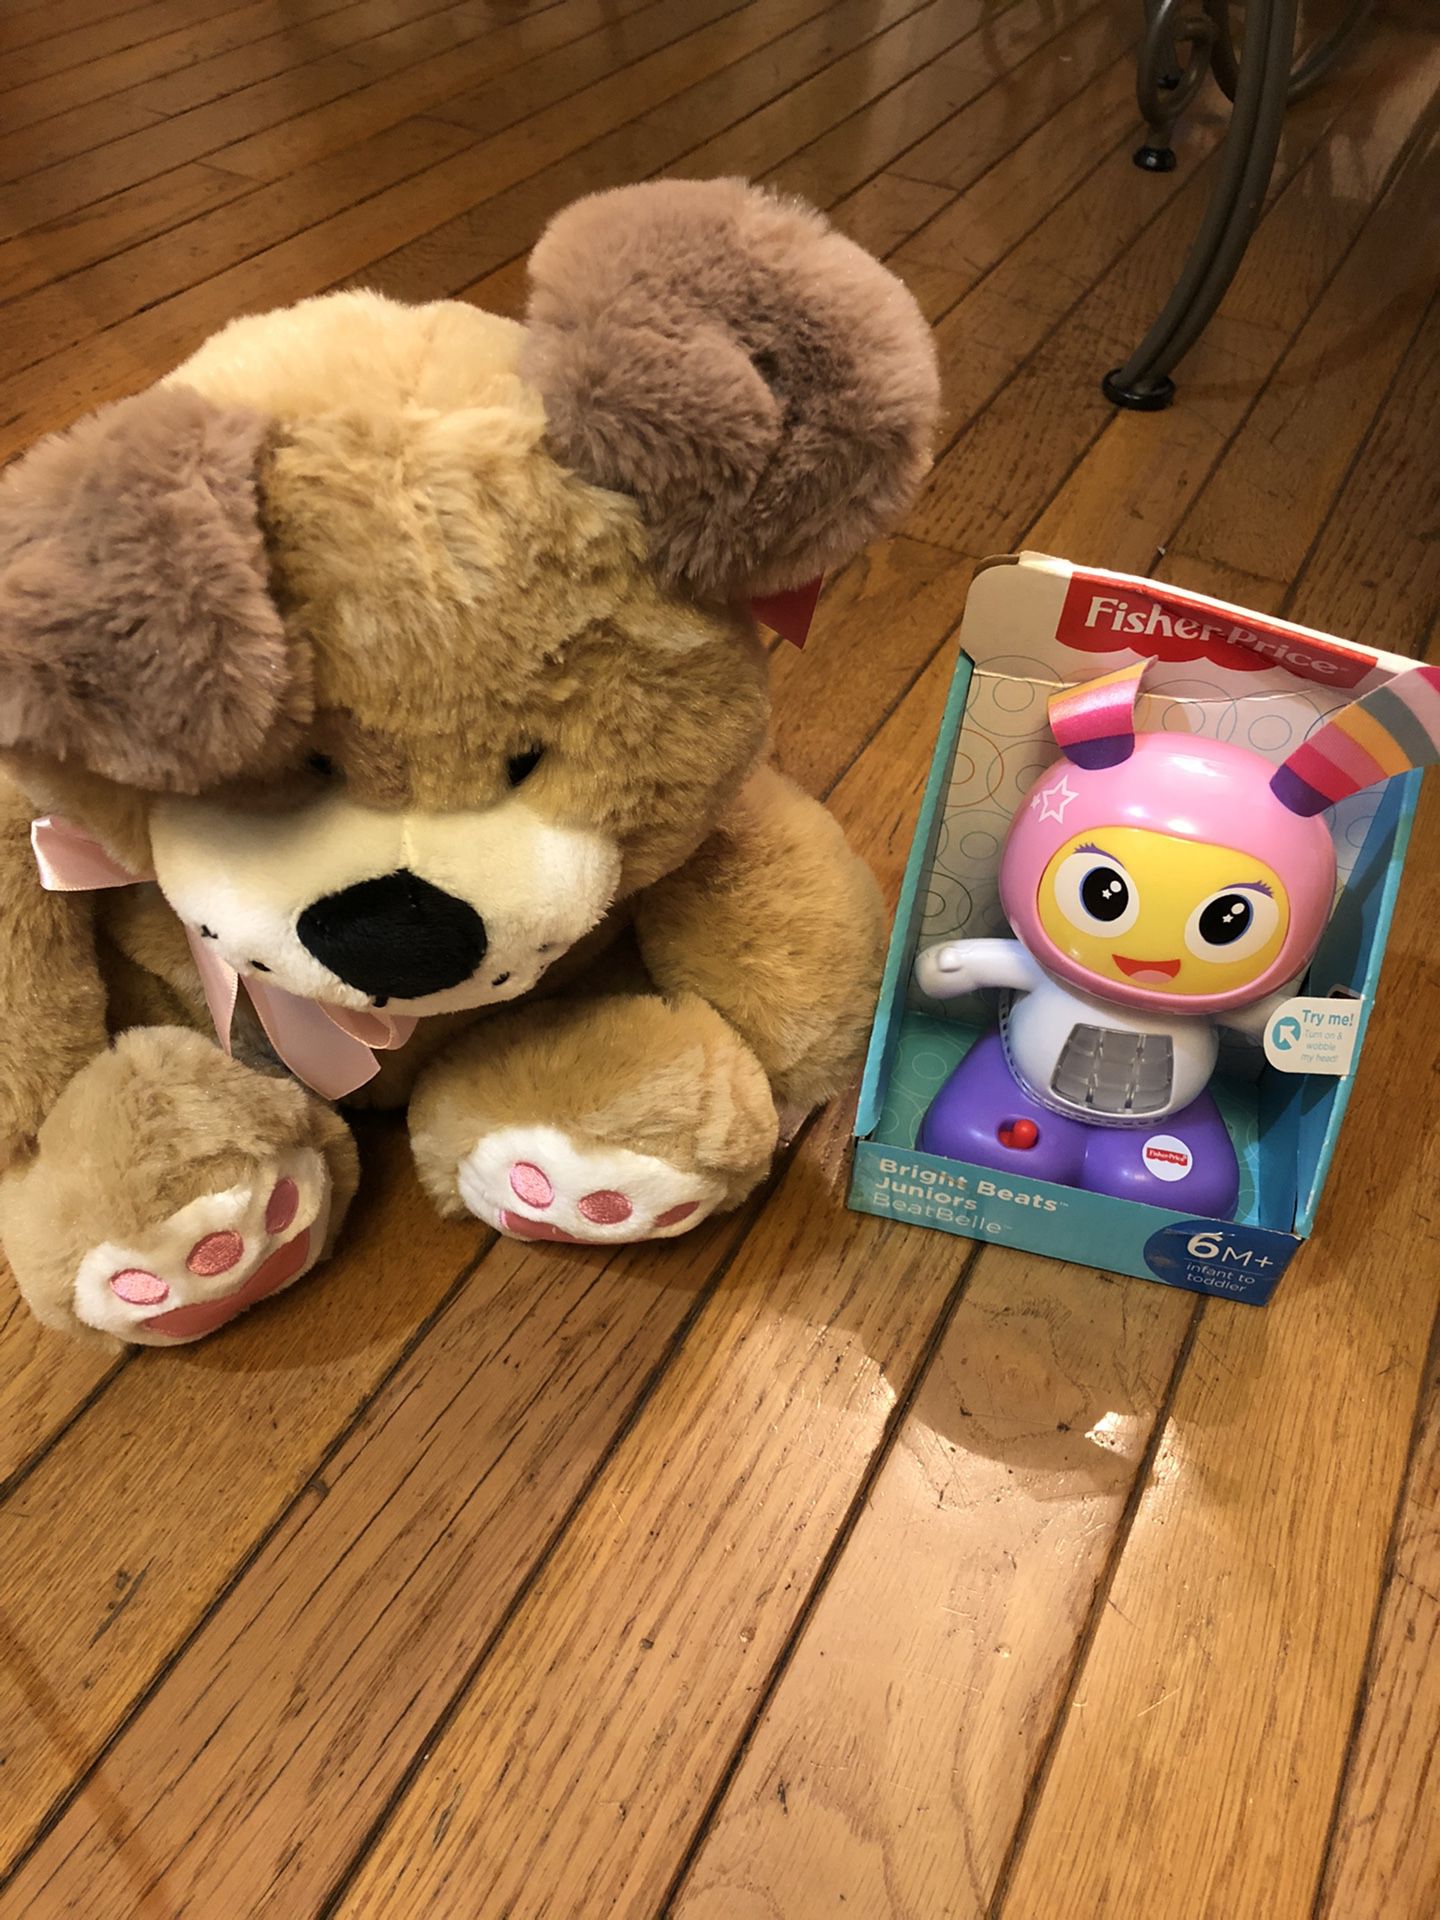  Stuffed Animal And Bright Beats Junior